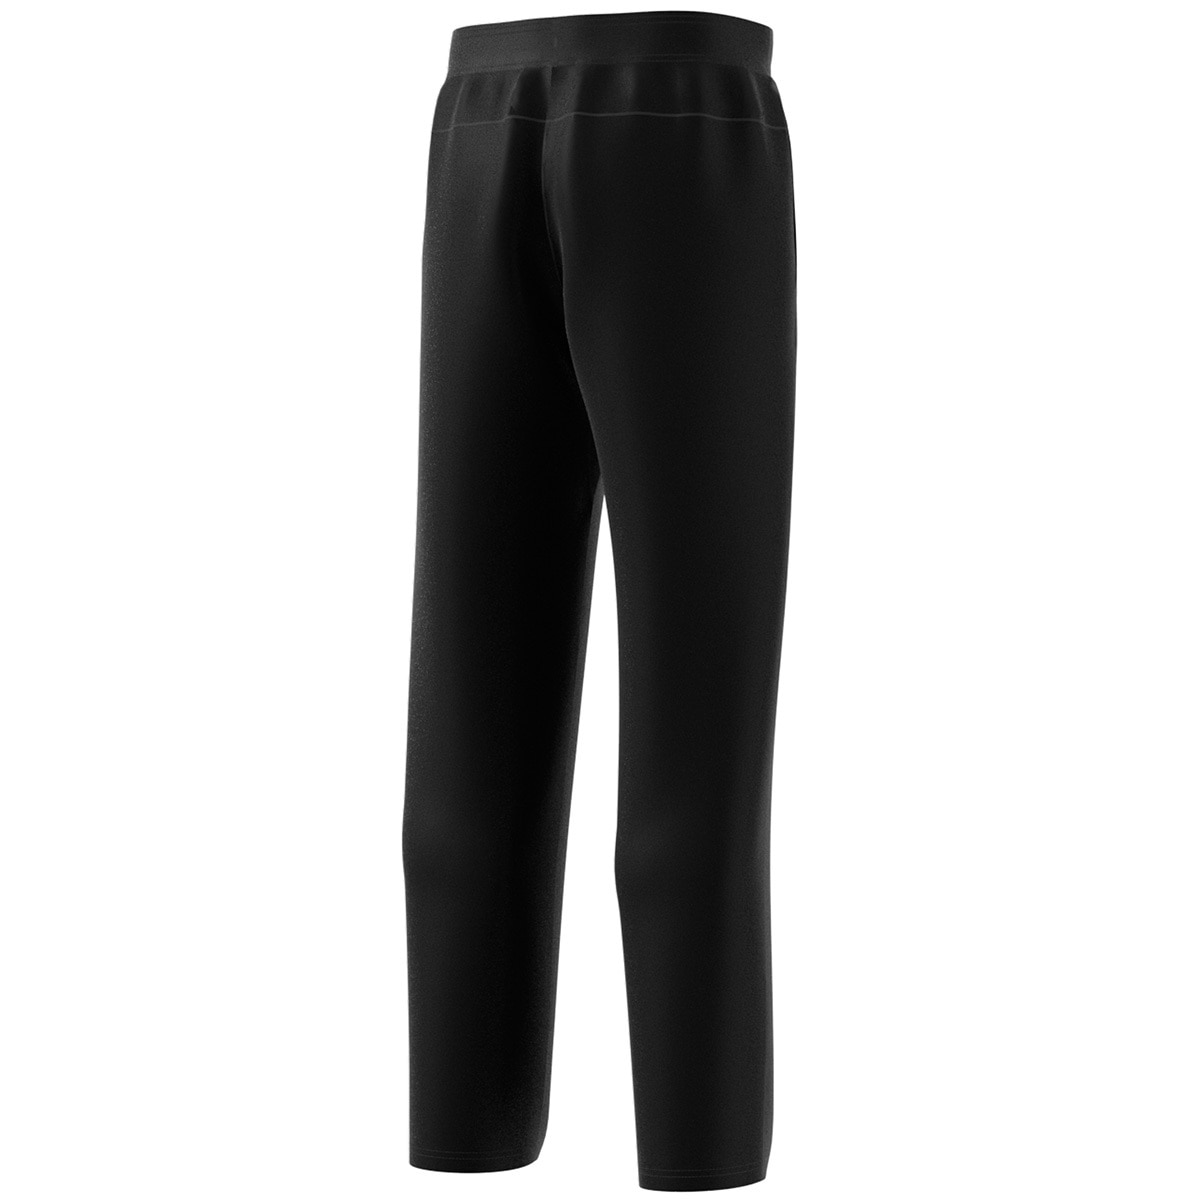 Adidas Men's Fleece Pants - Black